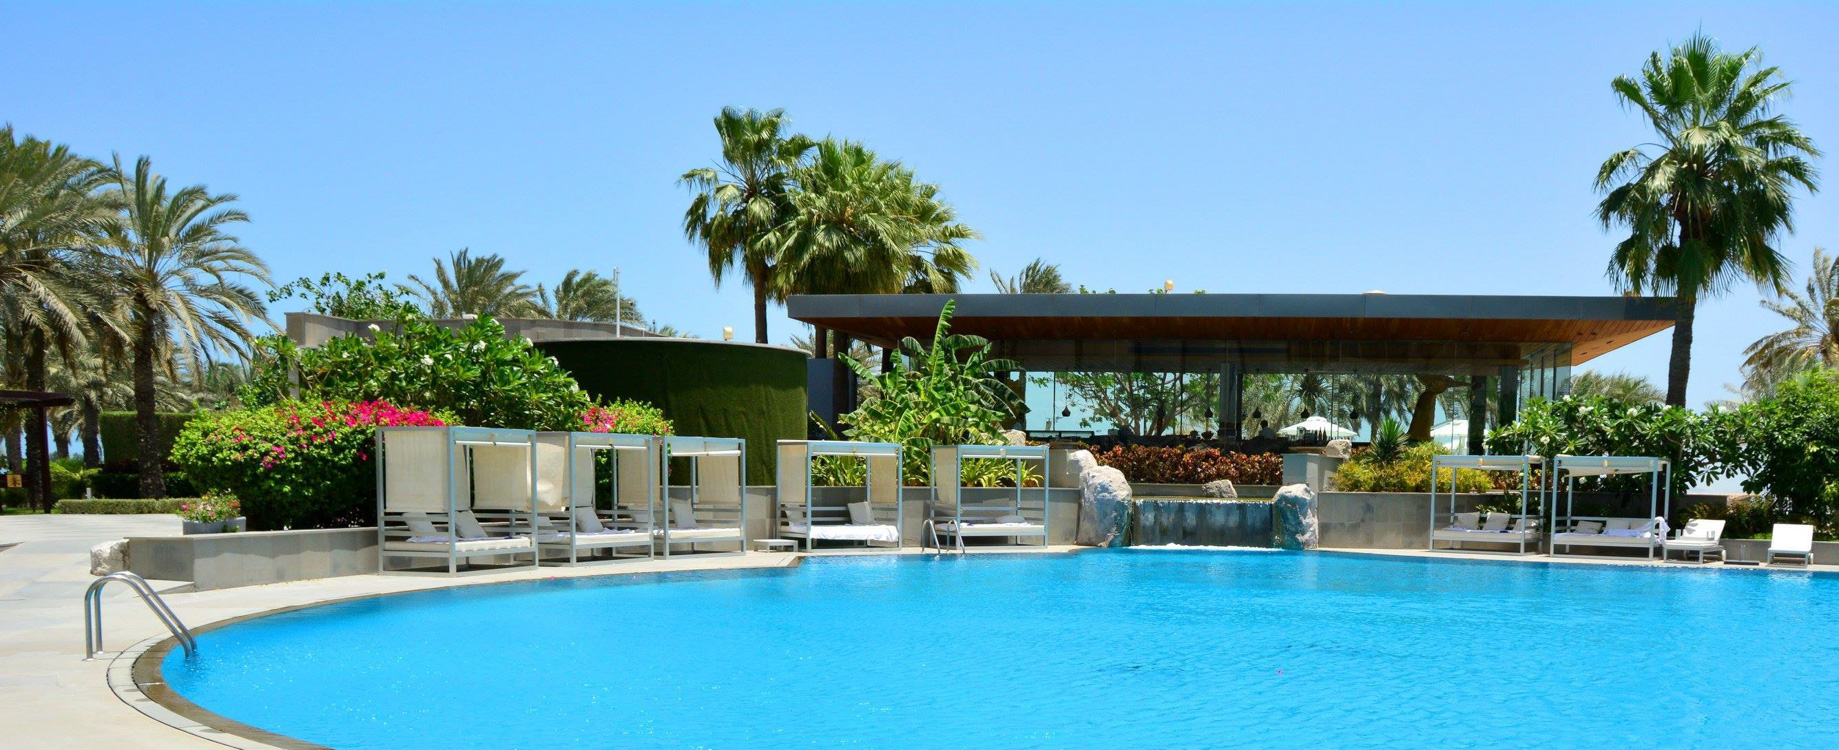 The Ritz-Carlton, Bahrain Resort Hotel – Manama, Bahrain – Exterior Pool